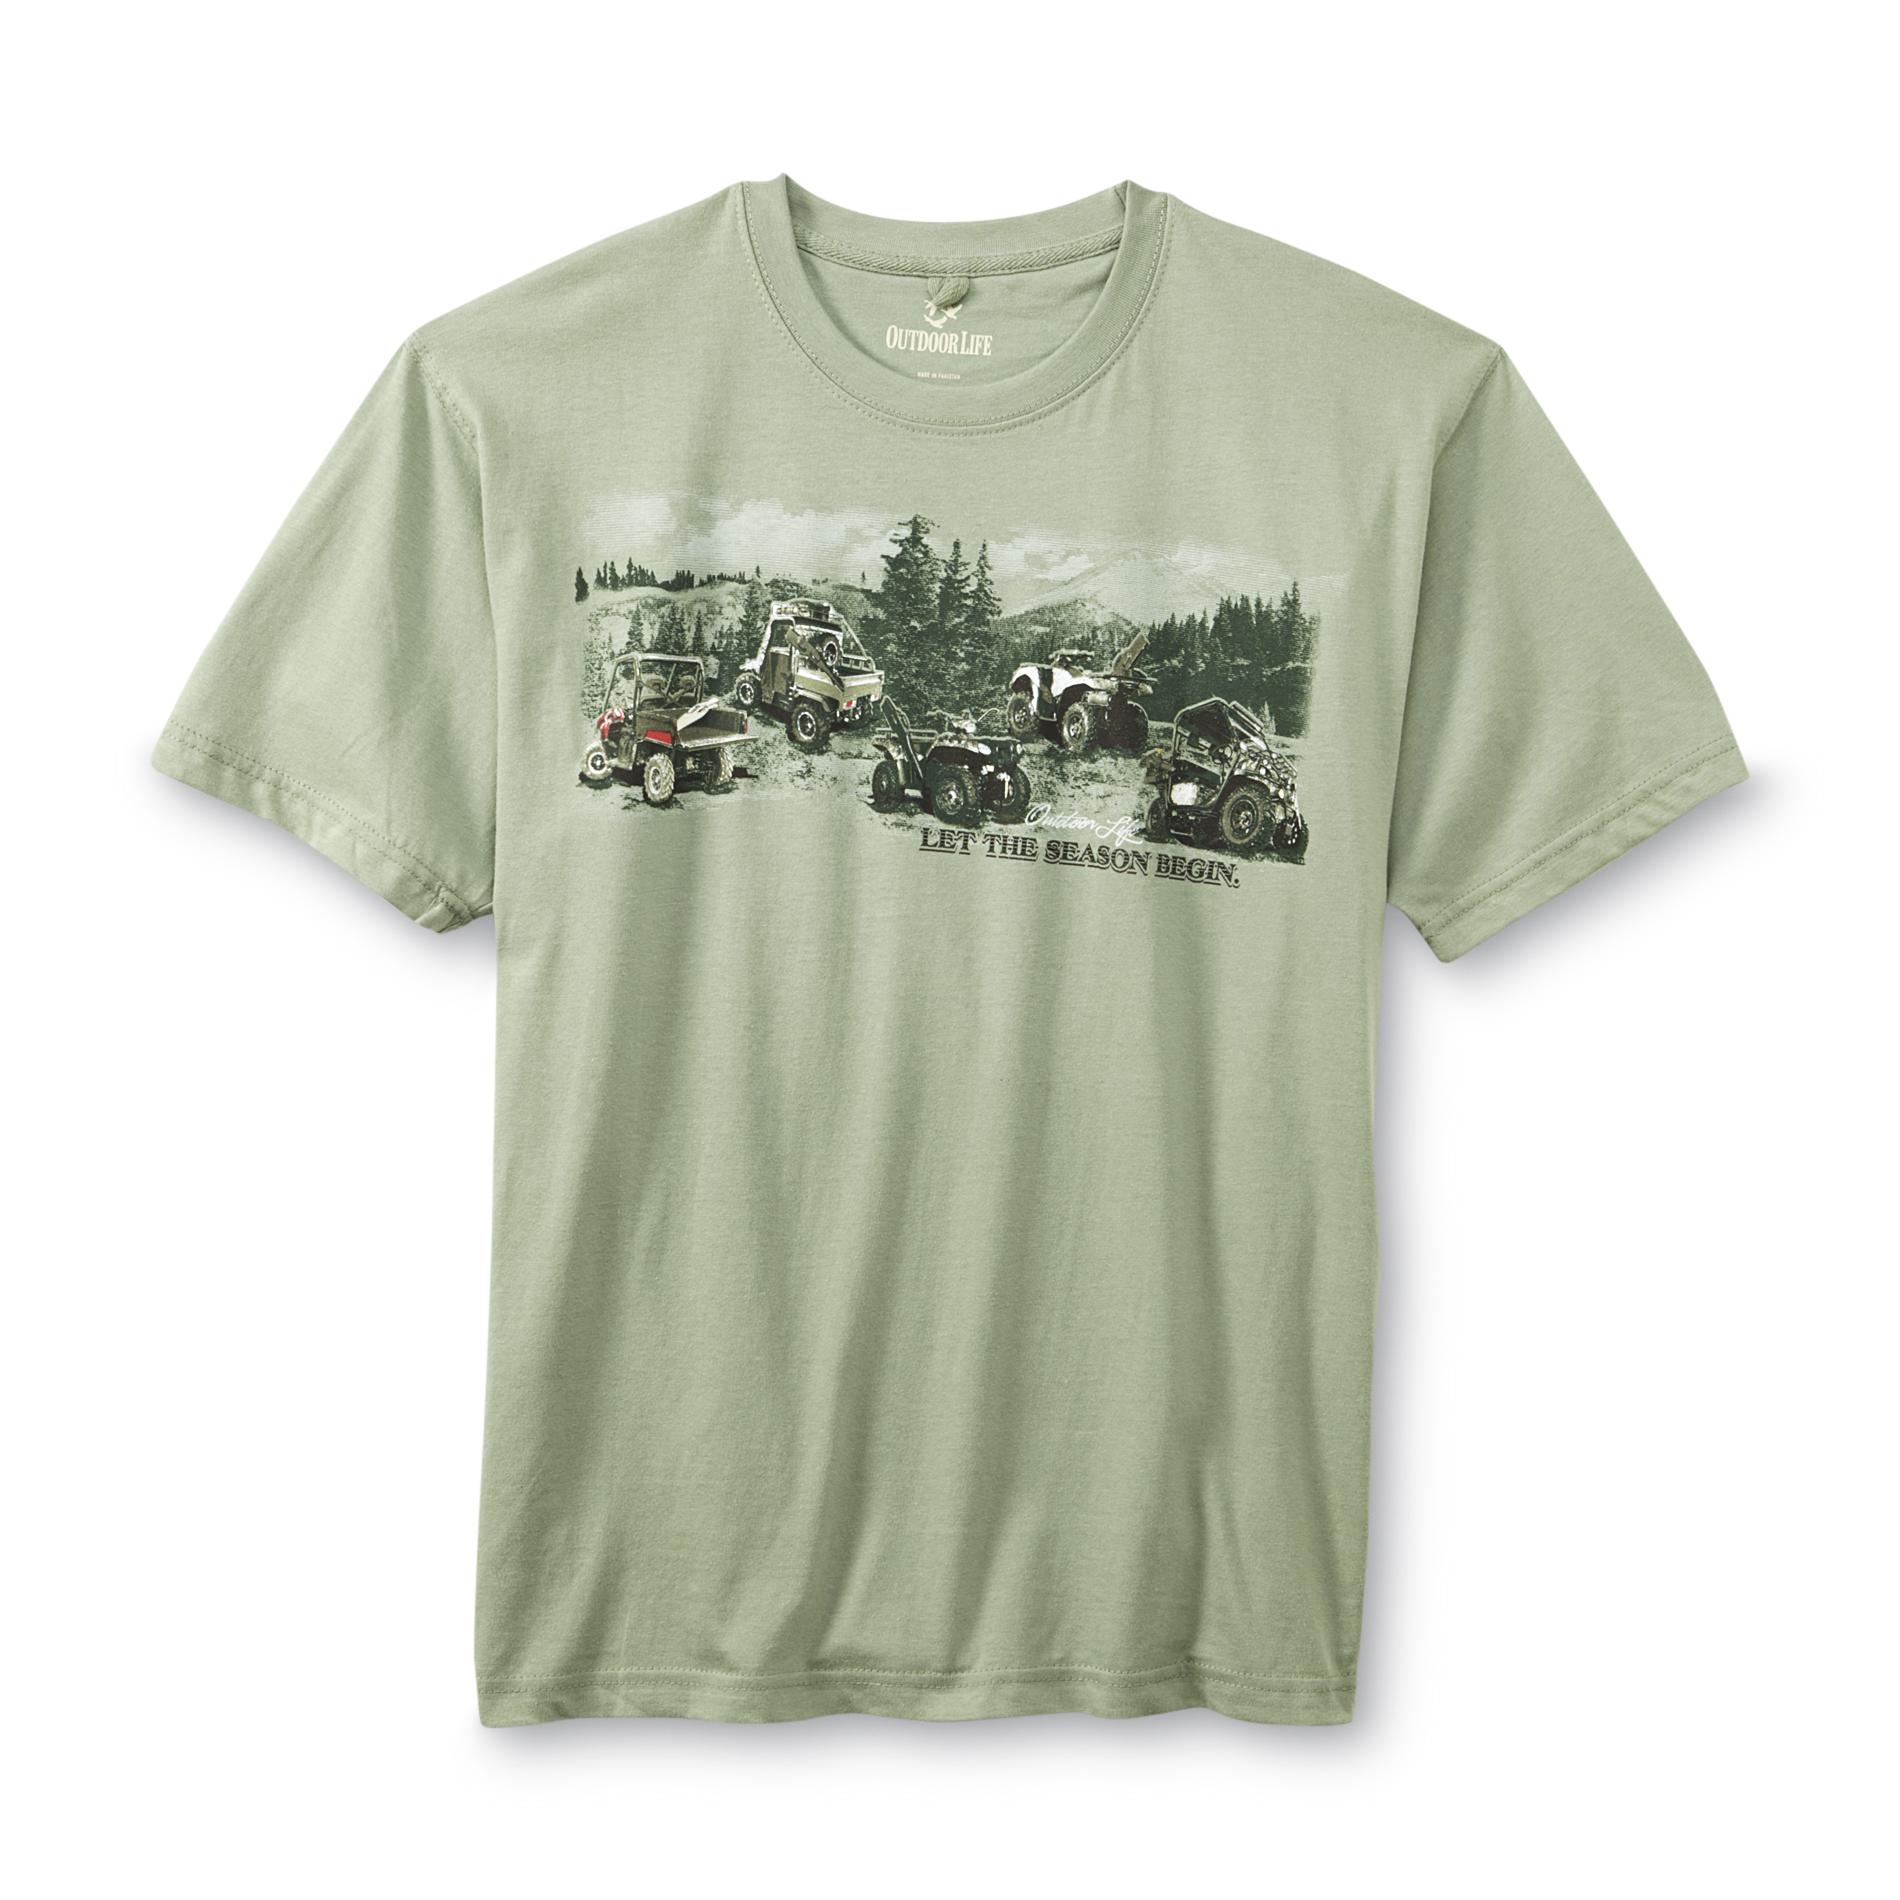 Outdoor Life Men's Big & Tall Graphic T-Shirt - Let The Season Begin